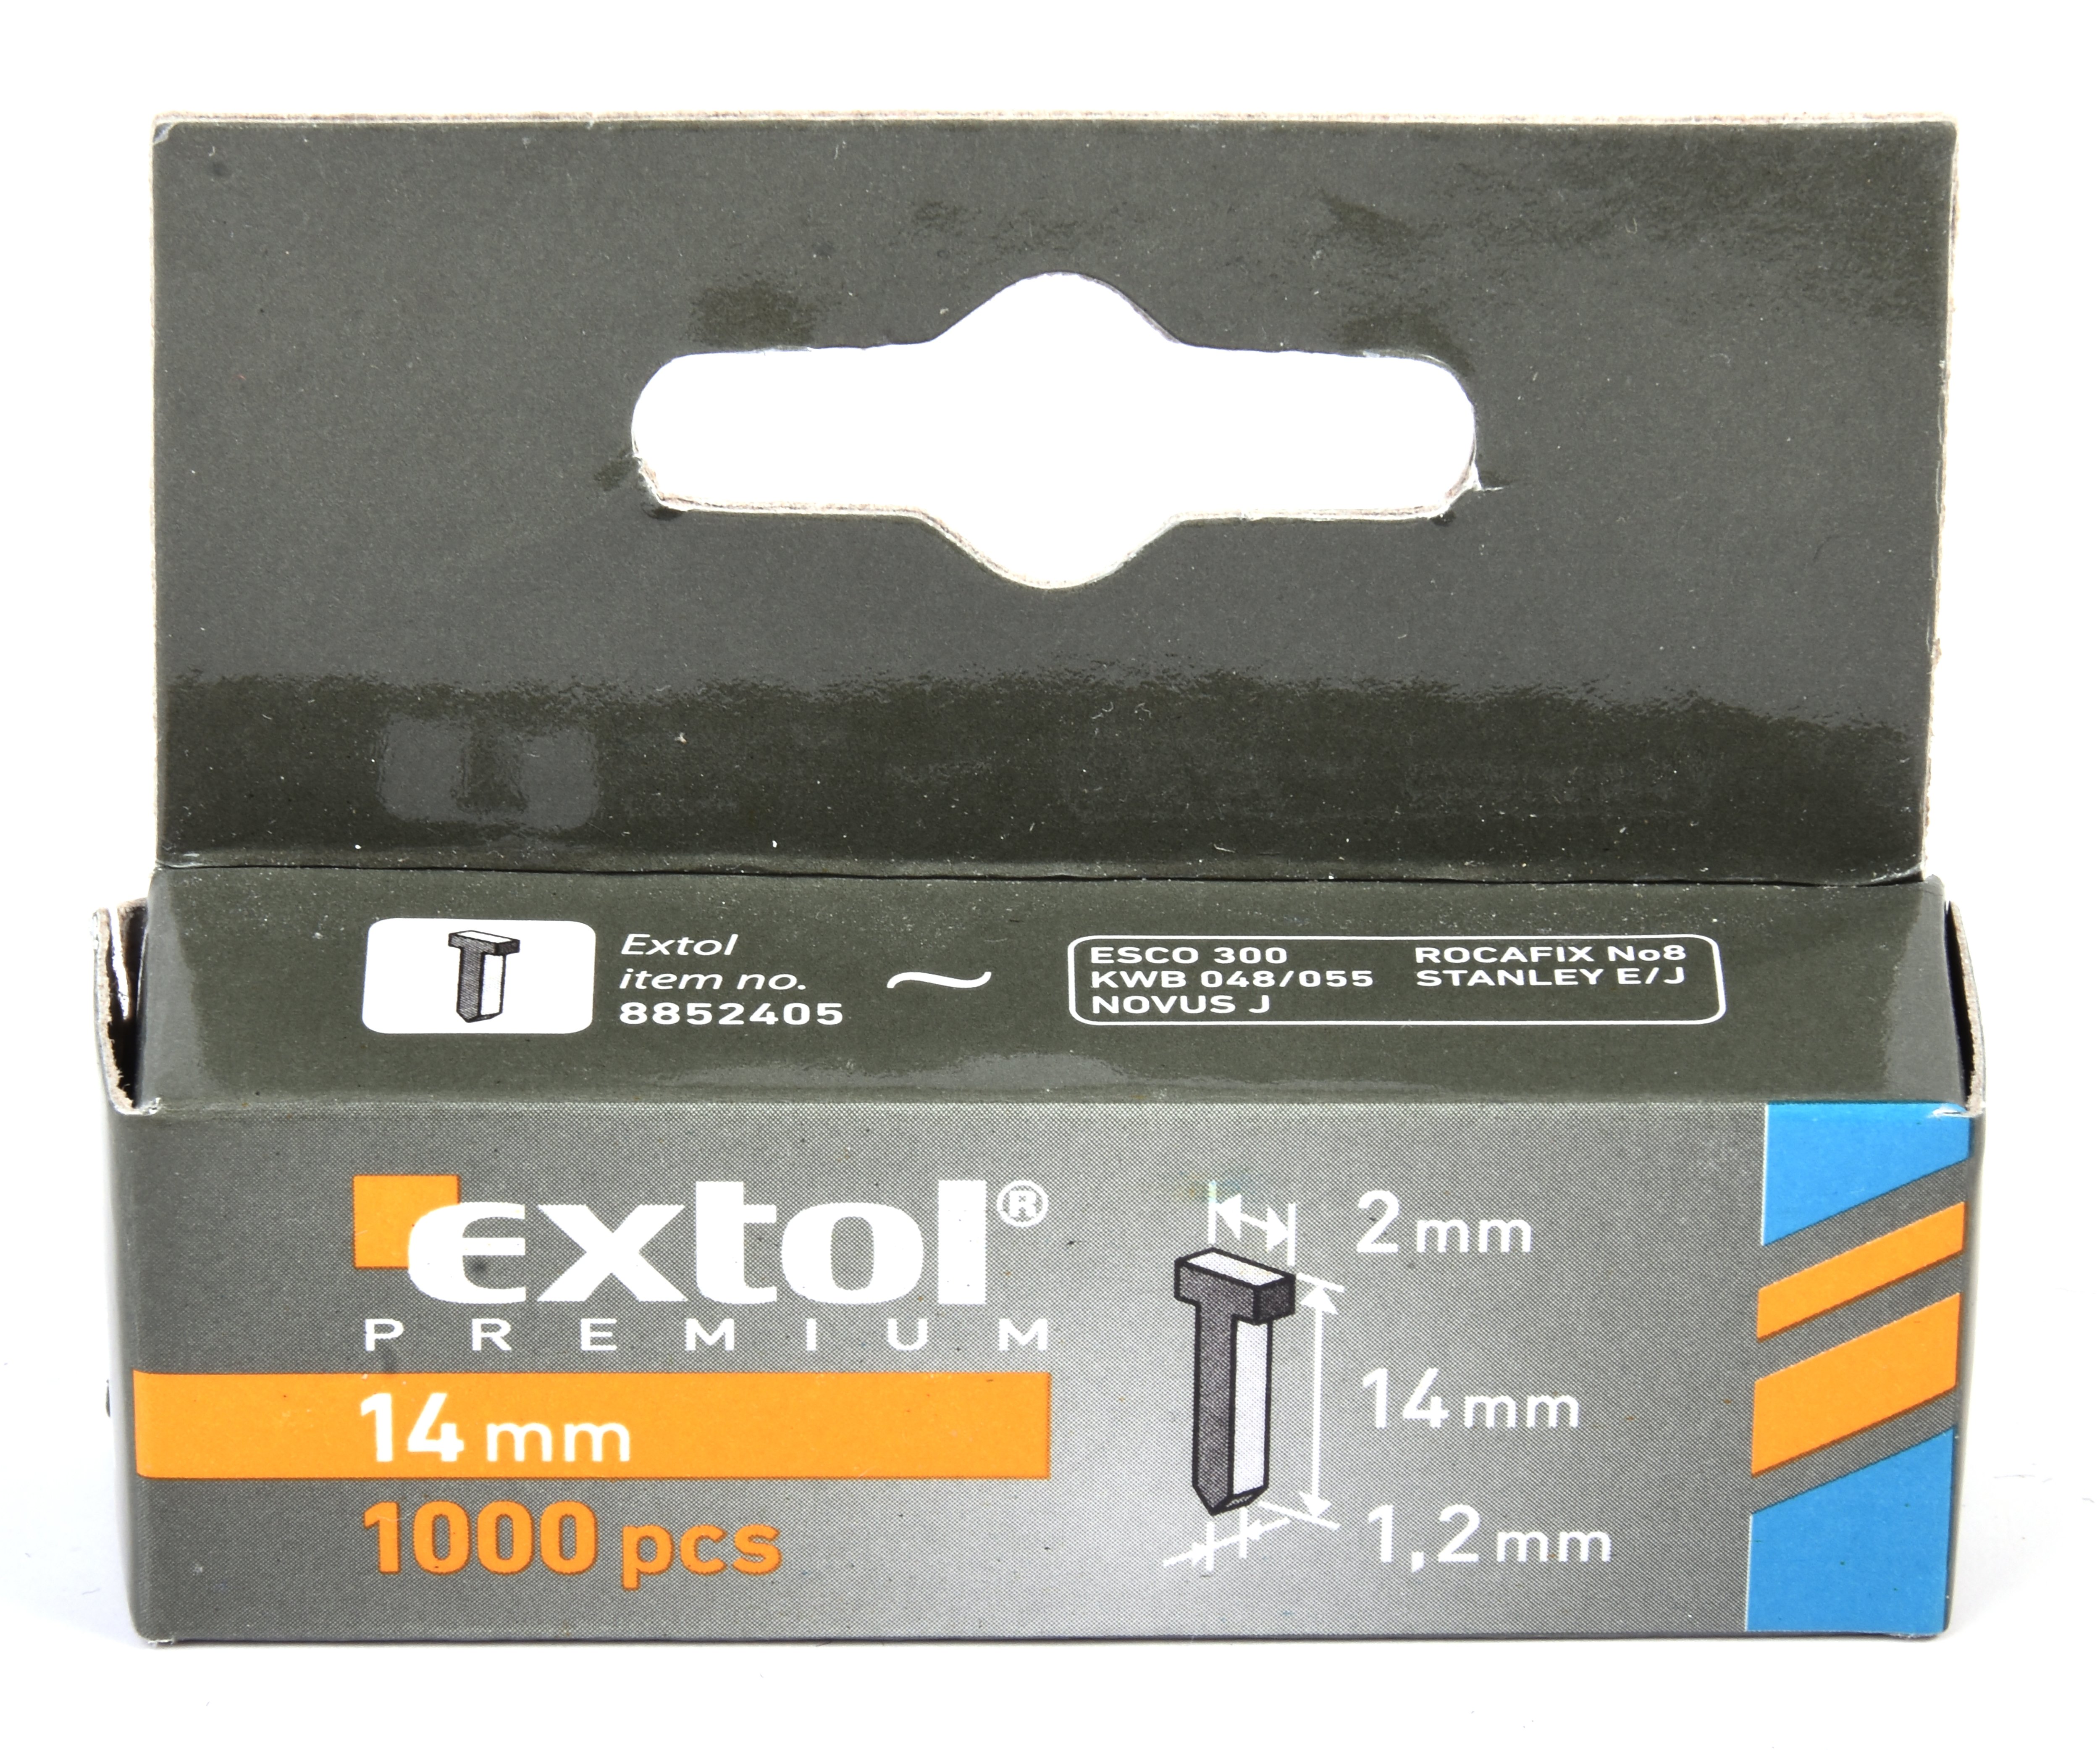 Hřebíky 1000ks Extol Premium - 8852403 10mm